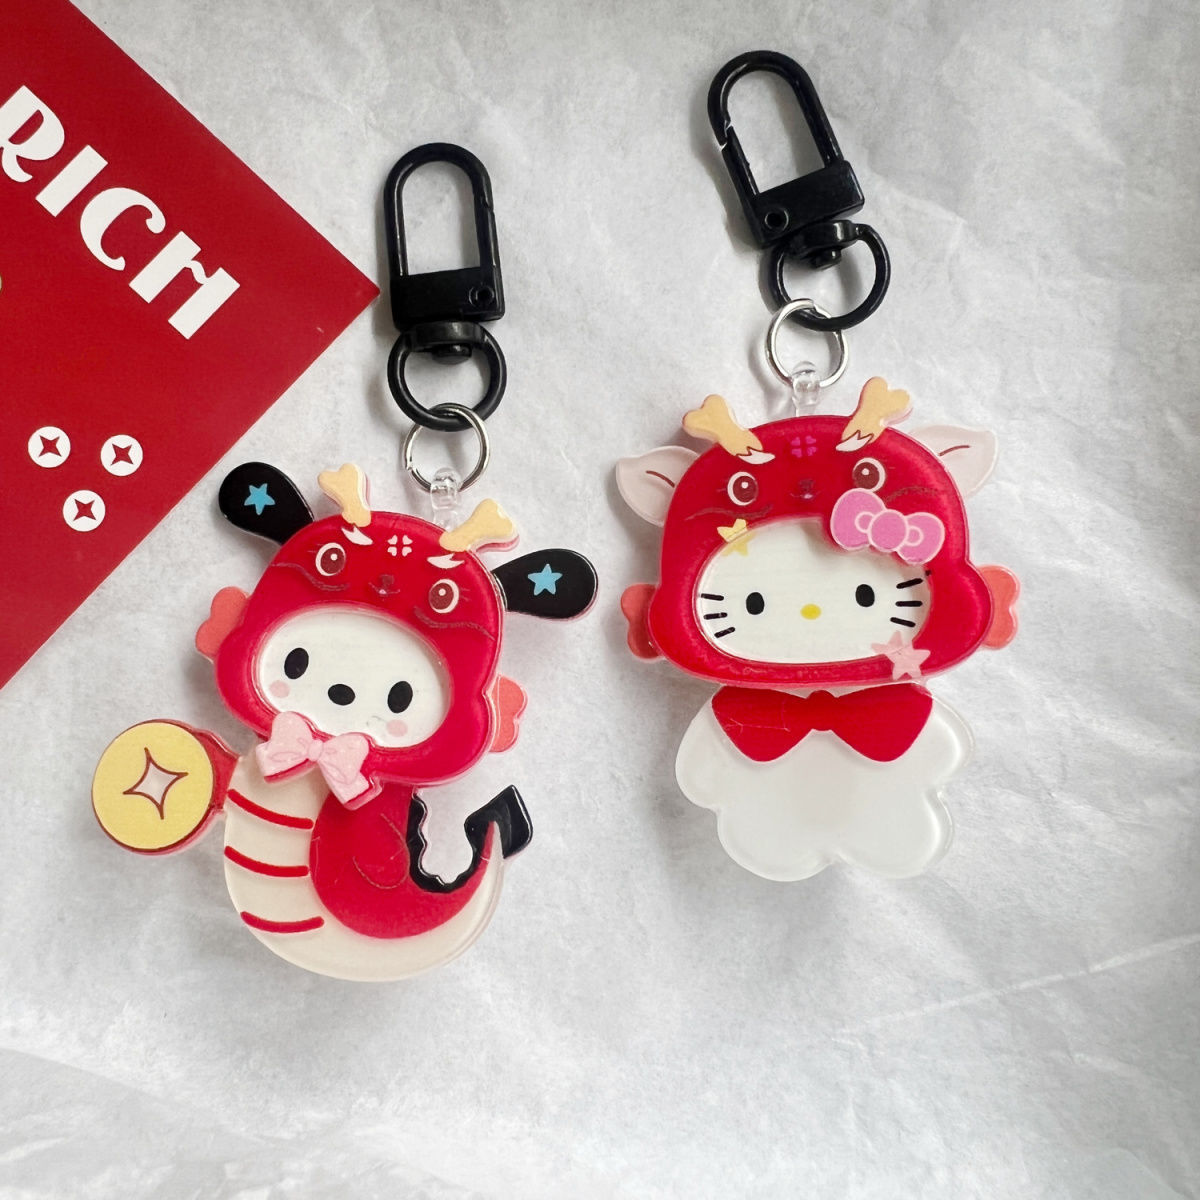 new year dragon year sanrio keychain small gift cute original schoolbag pendant cartoon girlfriends gift accessories